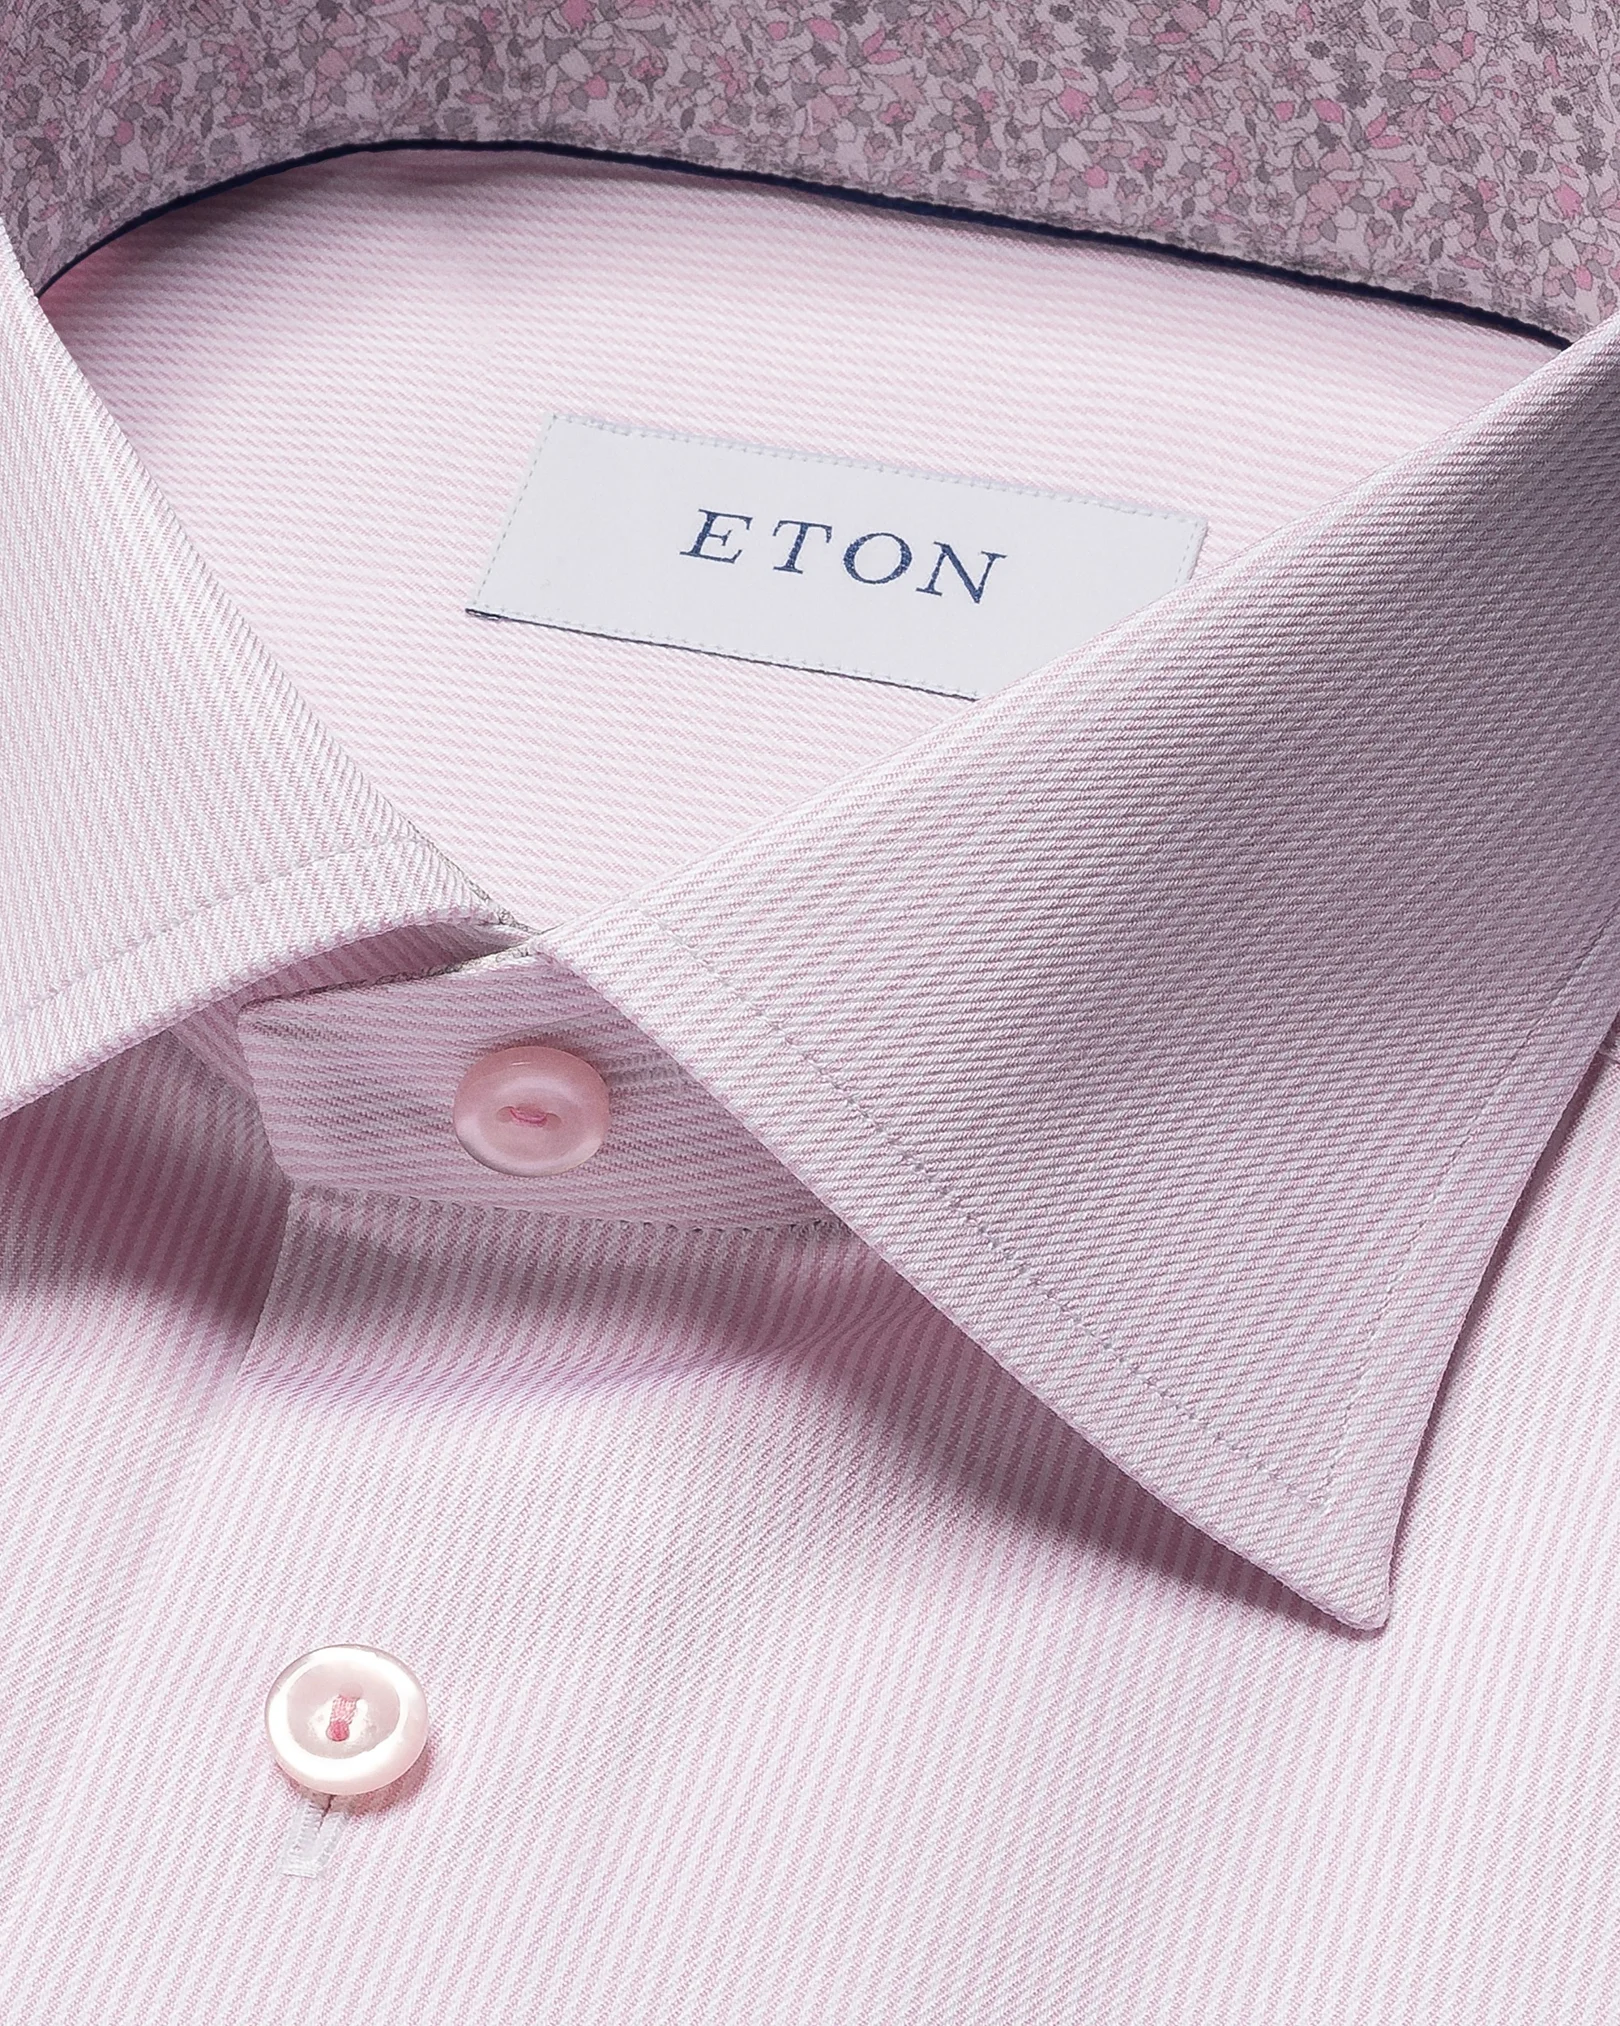 Eton - pink twill contrast shirt